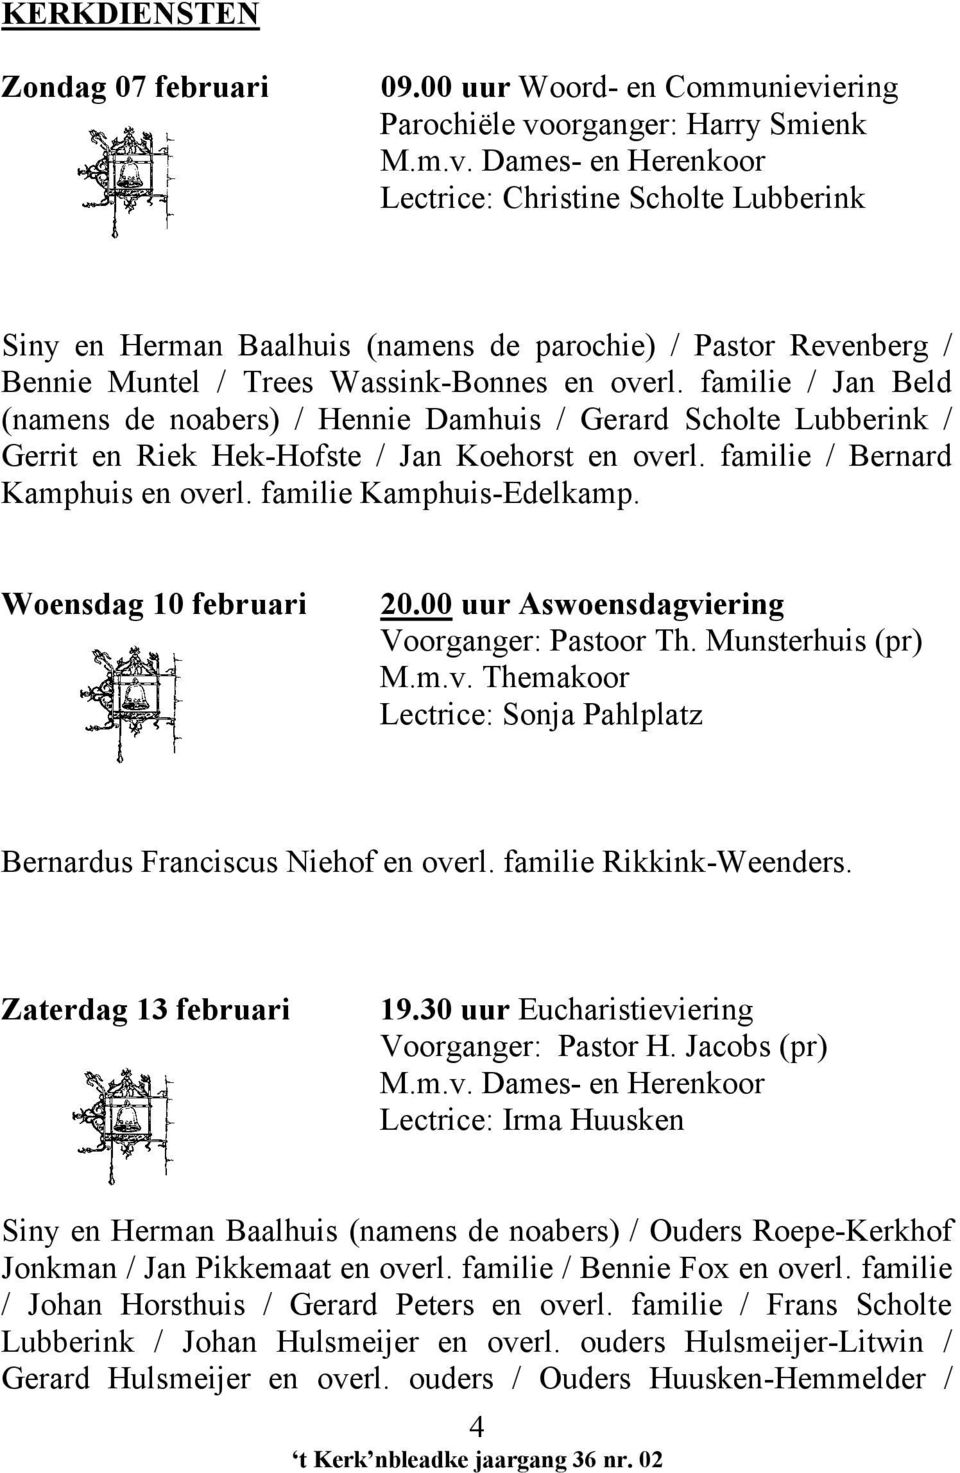 familie / Jan Beld (namens de noabers) / Hennie Damhuis / Gerard Scholte Lubberink / Gerrit en Riek Hek-Hofste / Jan Koehorst en overl. familie / Bernard Kamphuis en overl. familie Kamphuis-Edelkamp.